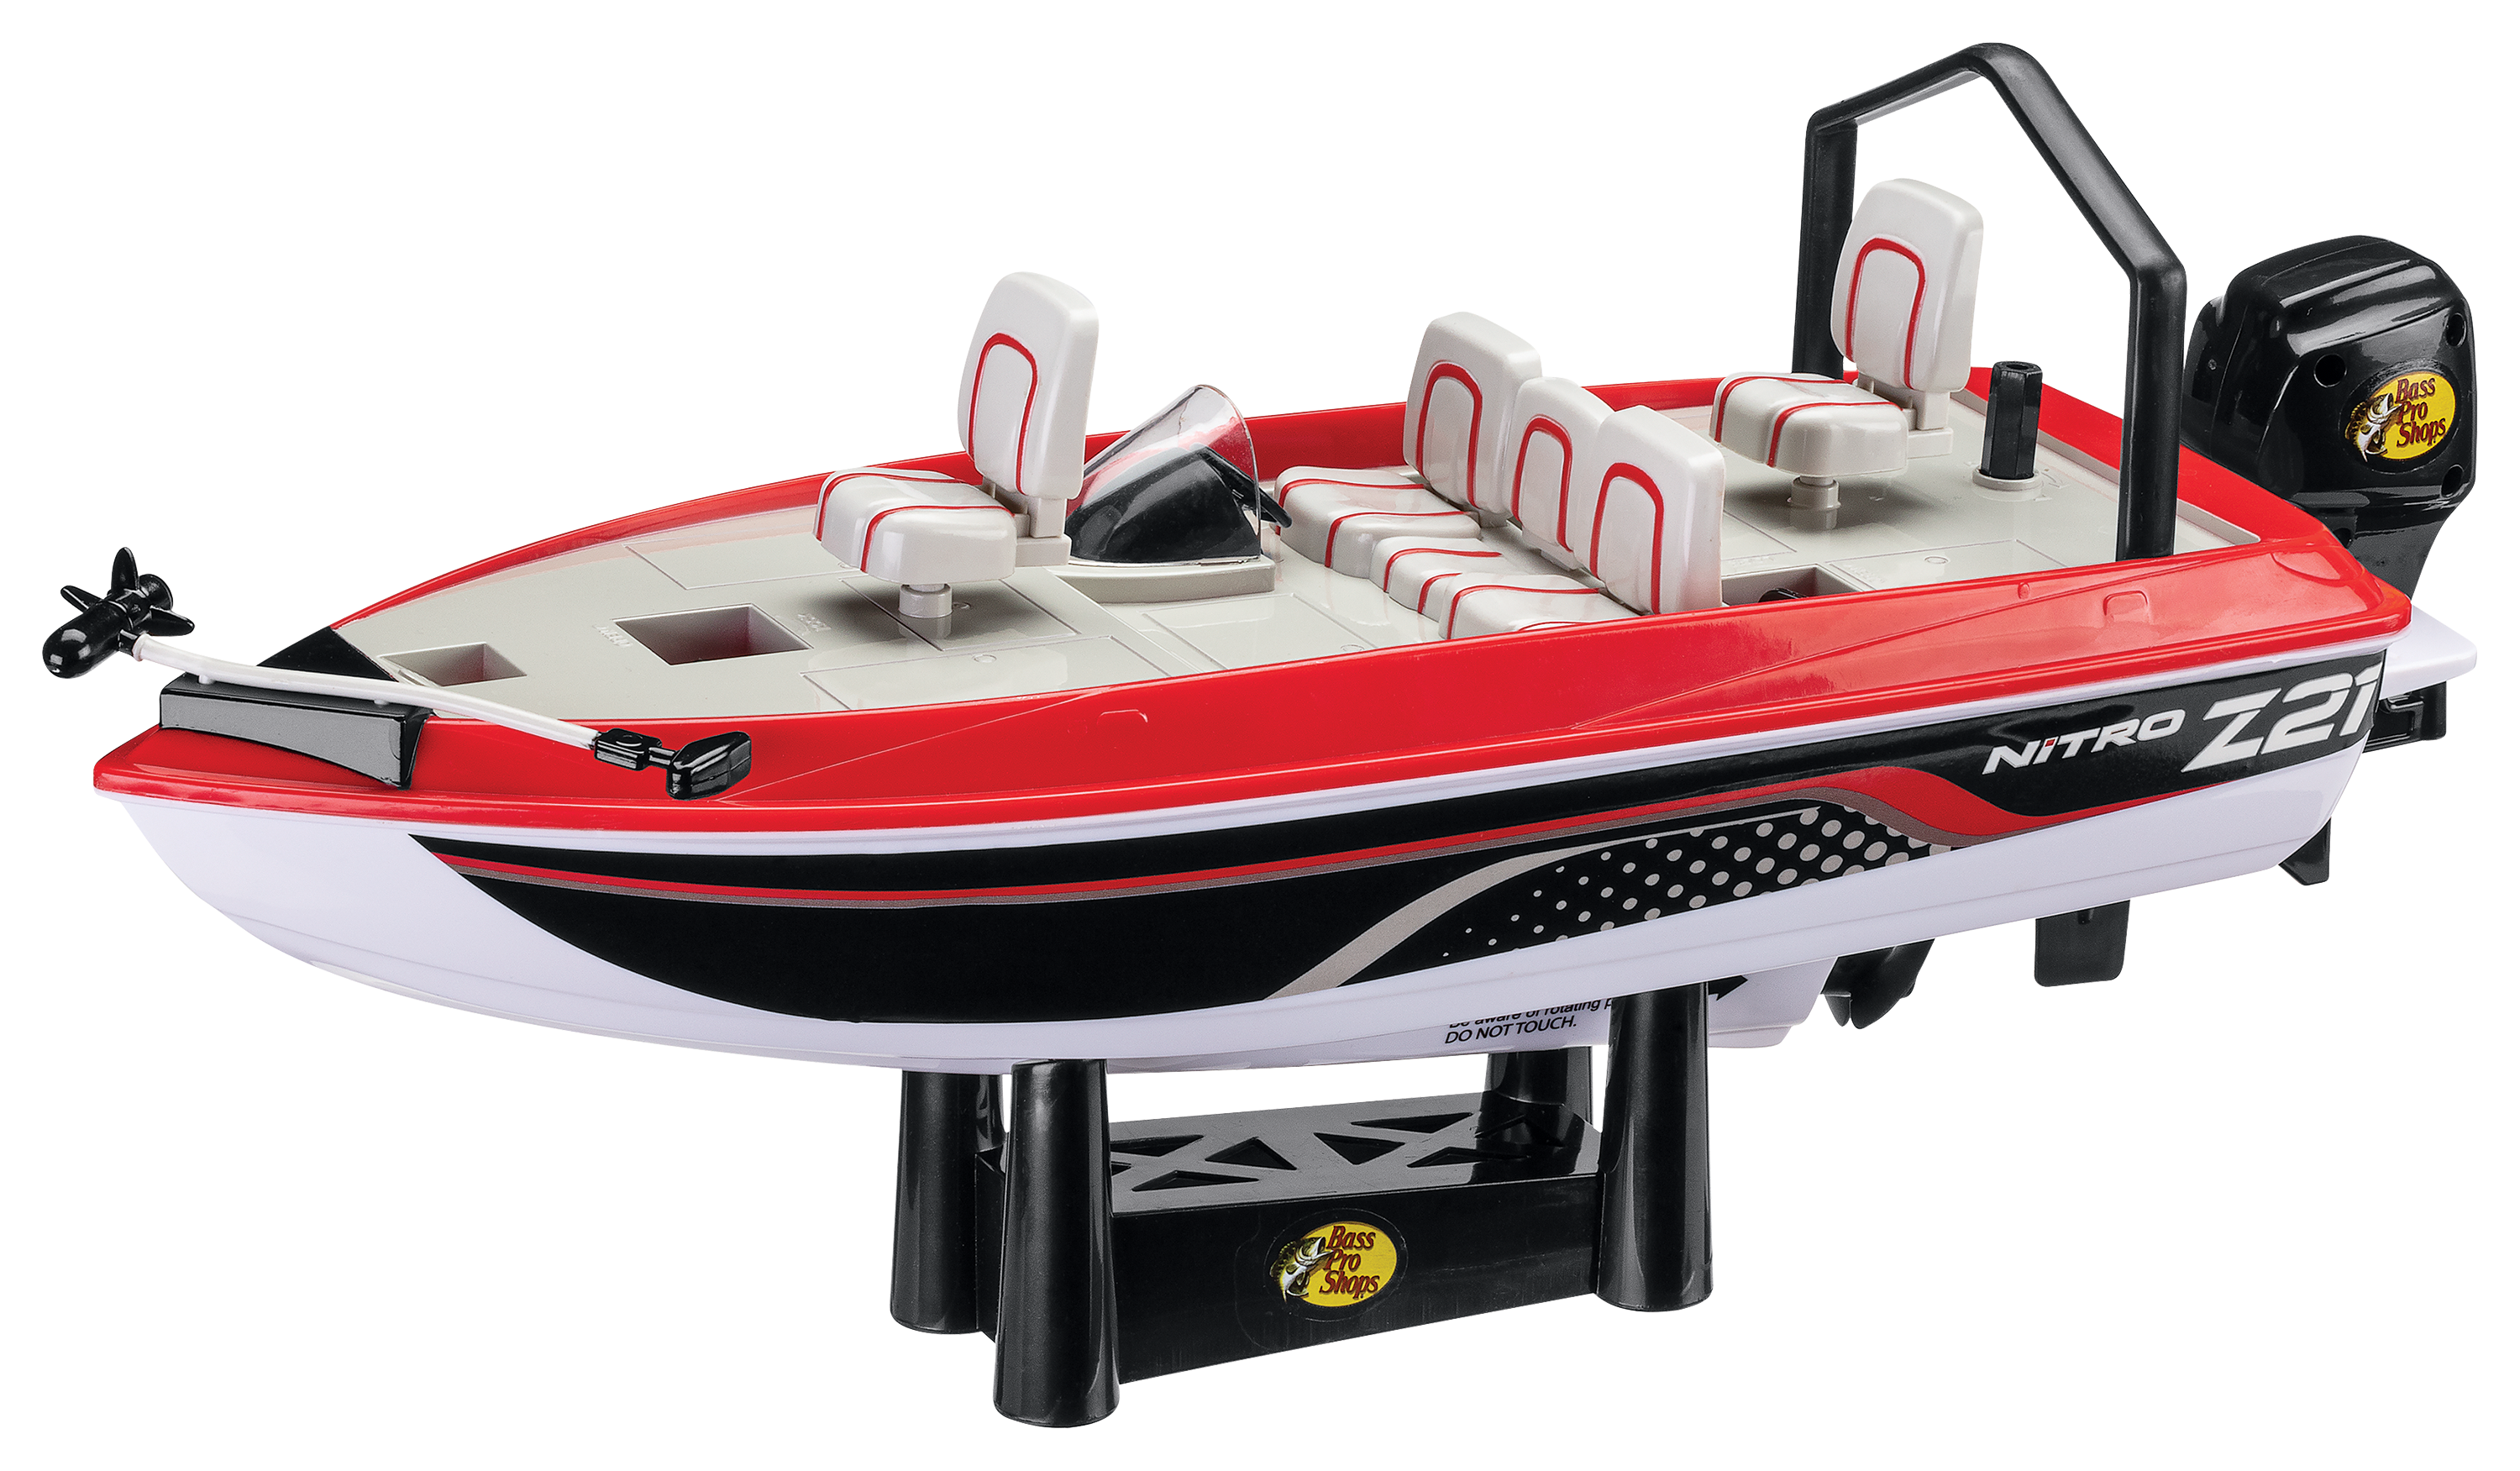 Bass Pro Shops Nitro Remote Boat | Cabela's